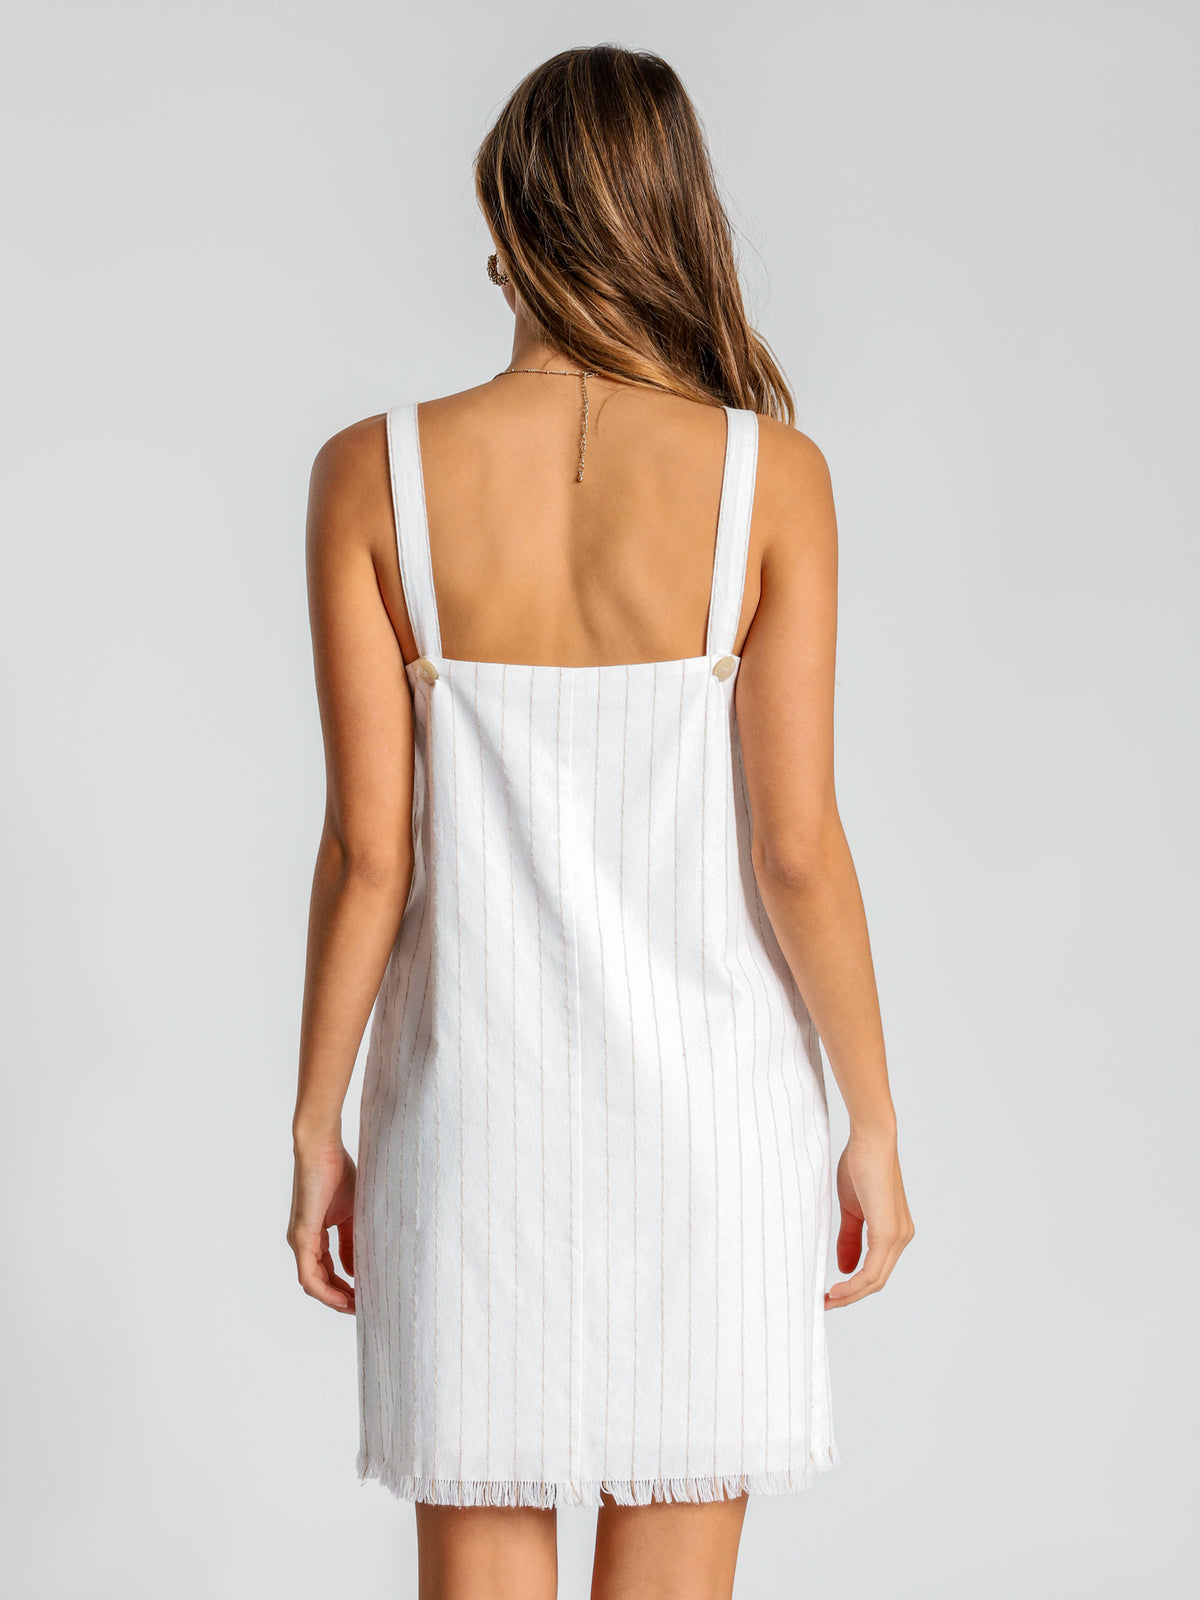 Ascot Stripe Cami Dress in White